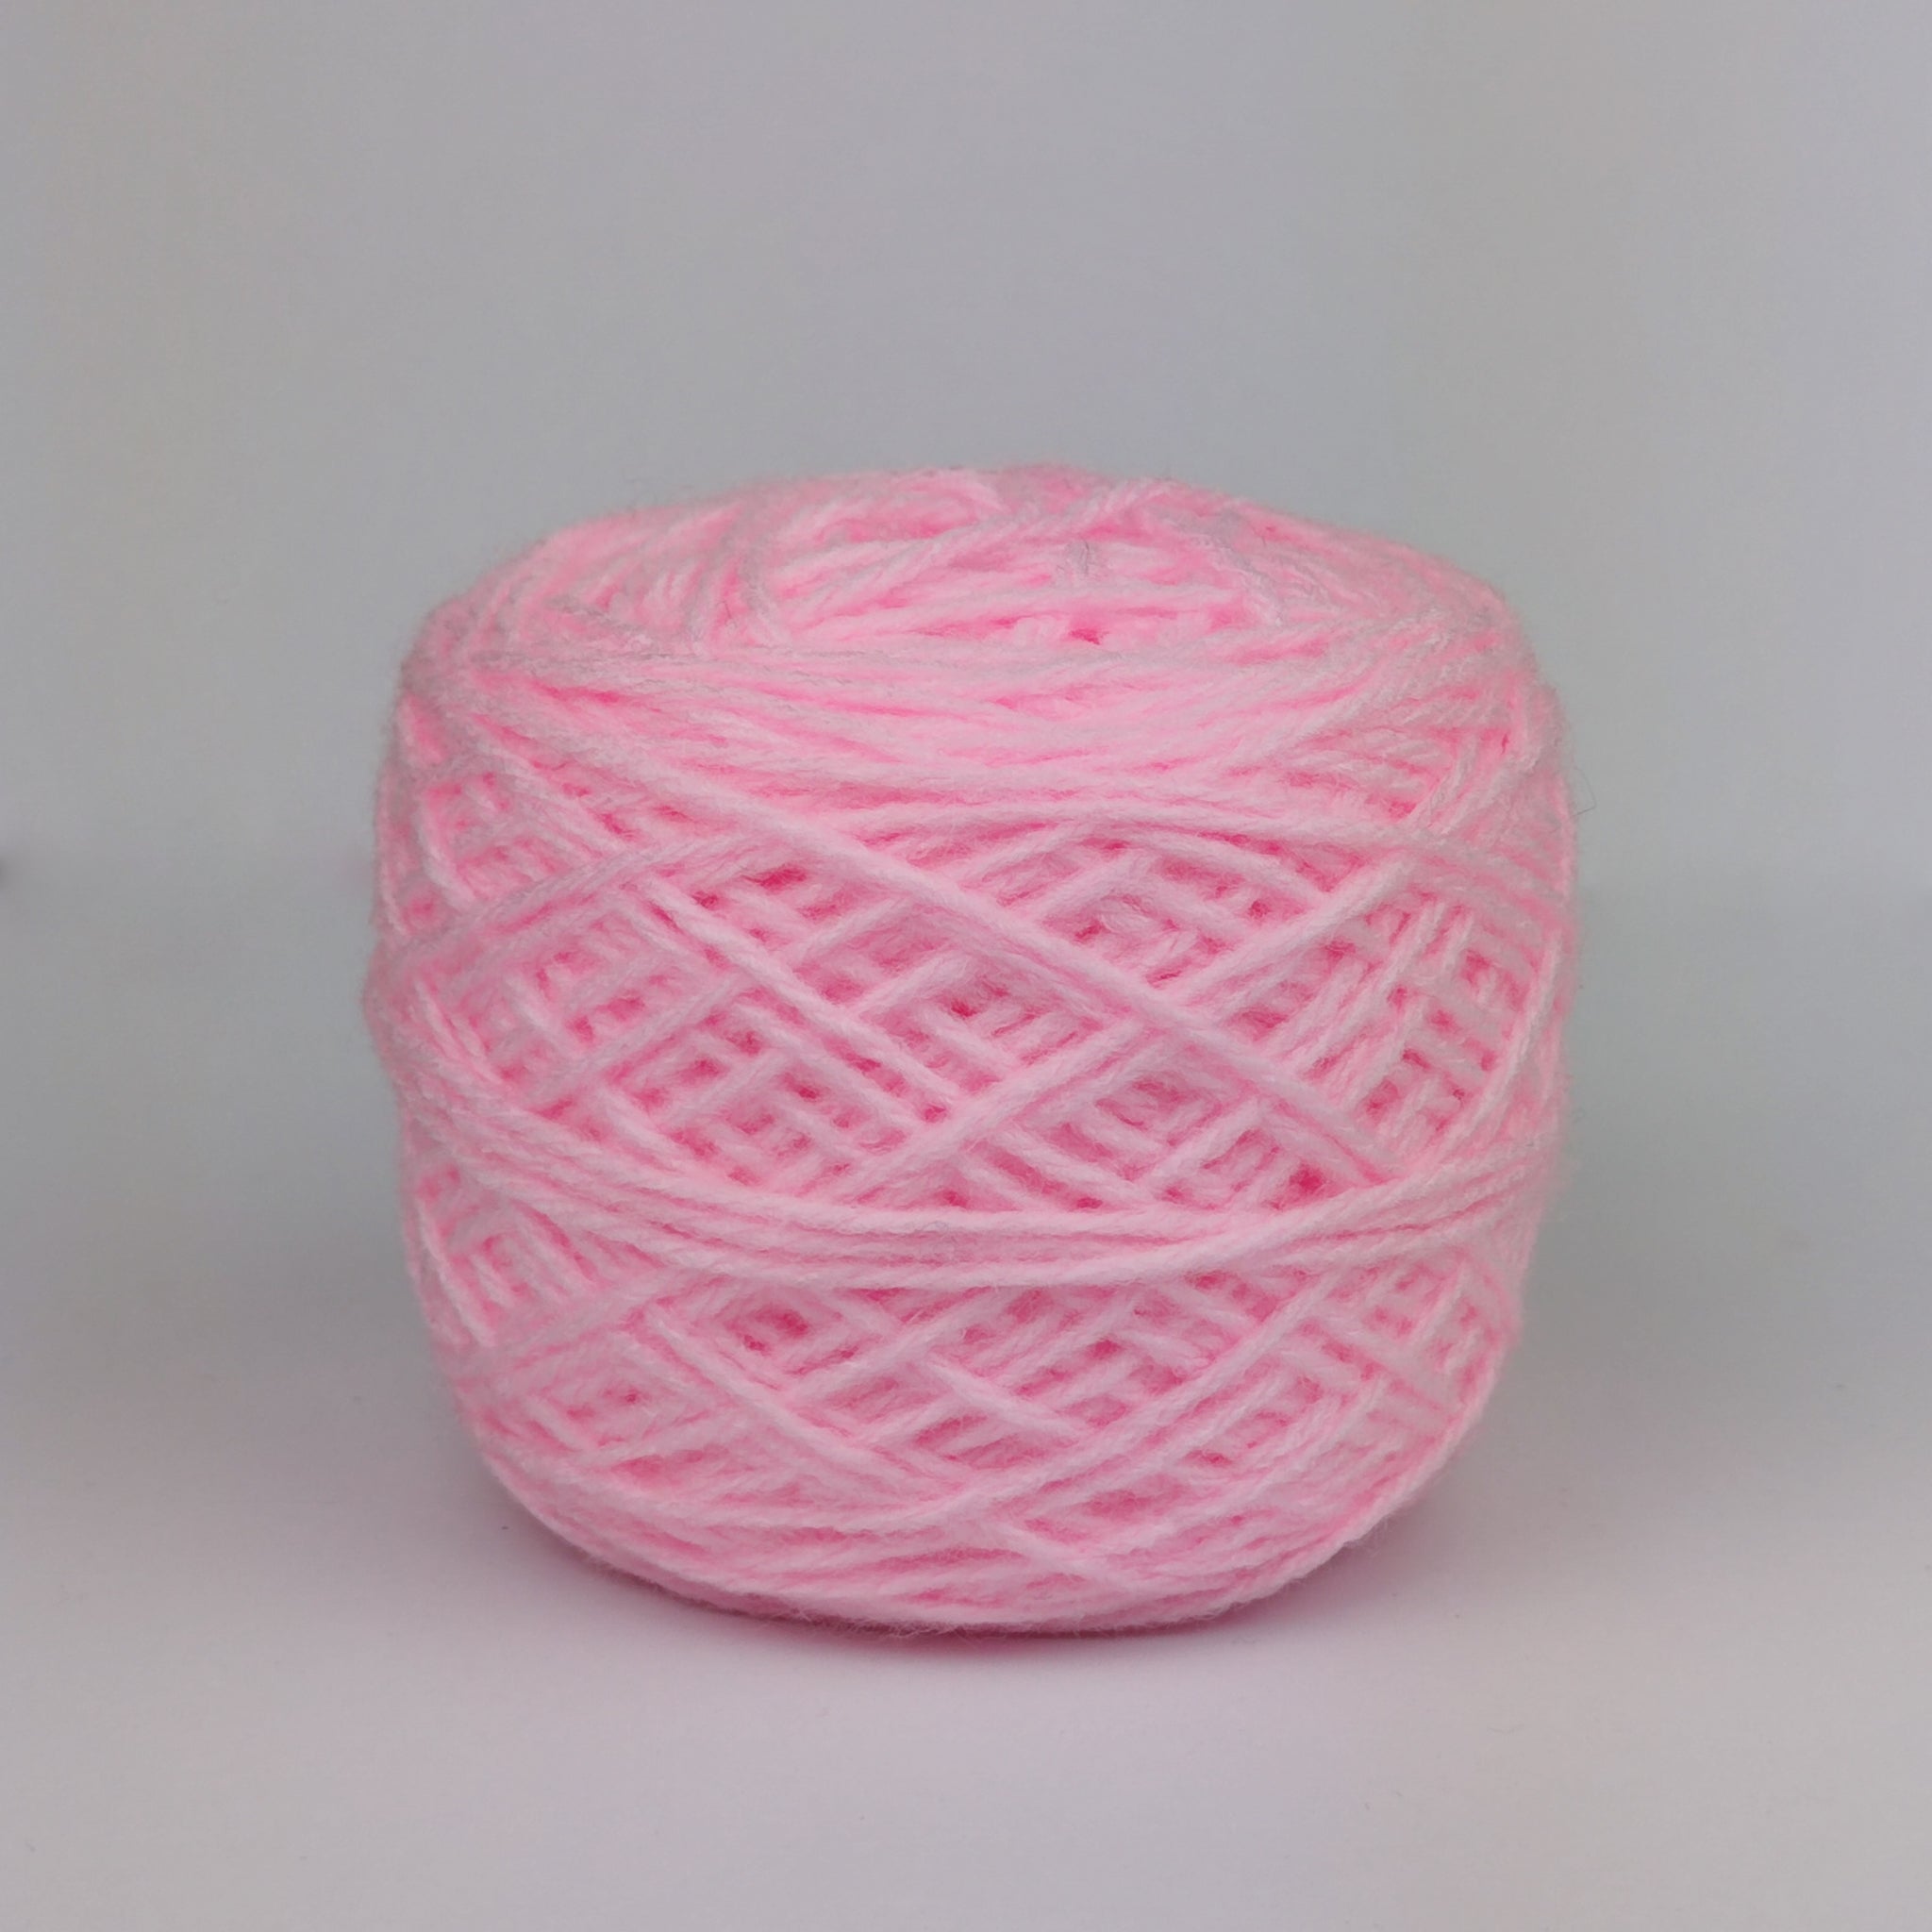 Lana gruesa ovillo rosado x 10 gramos - Ofimarket